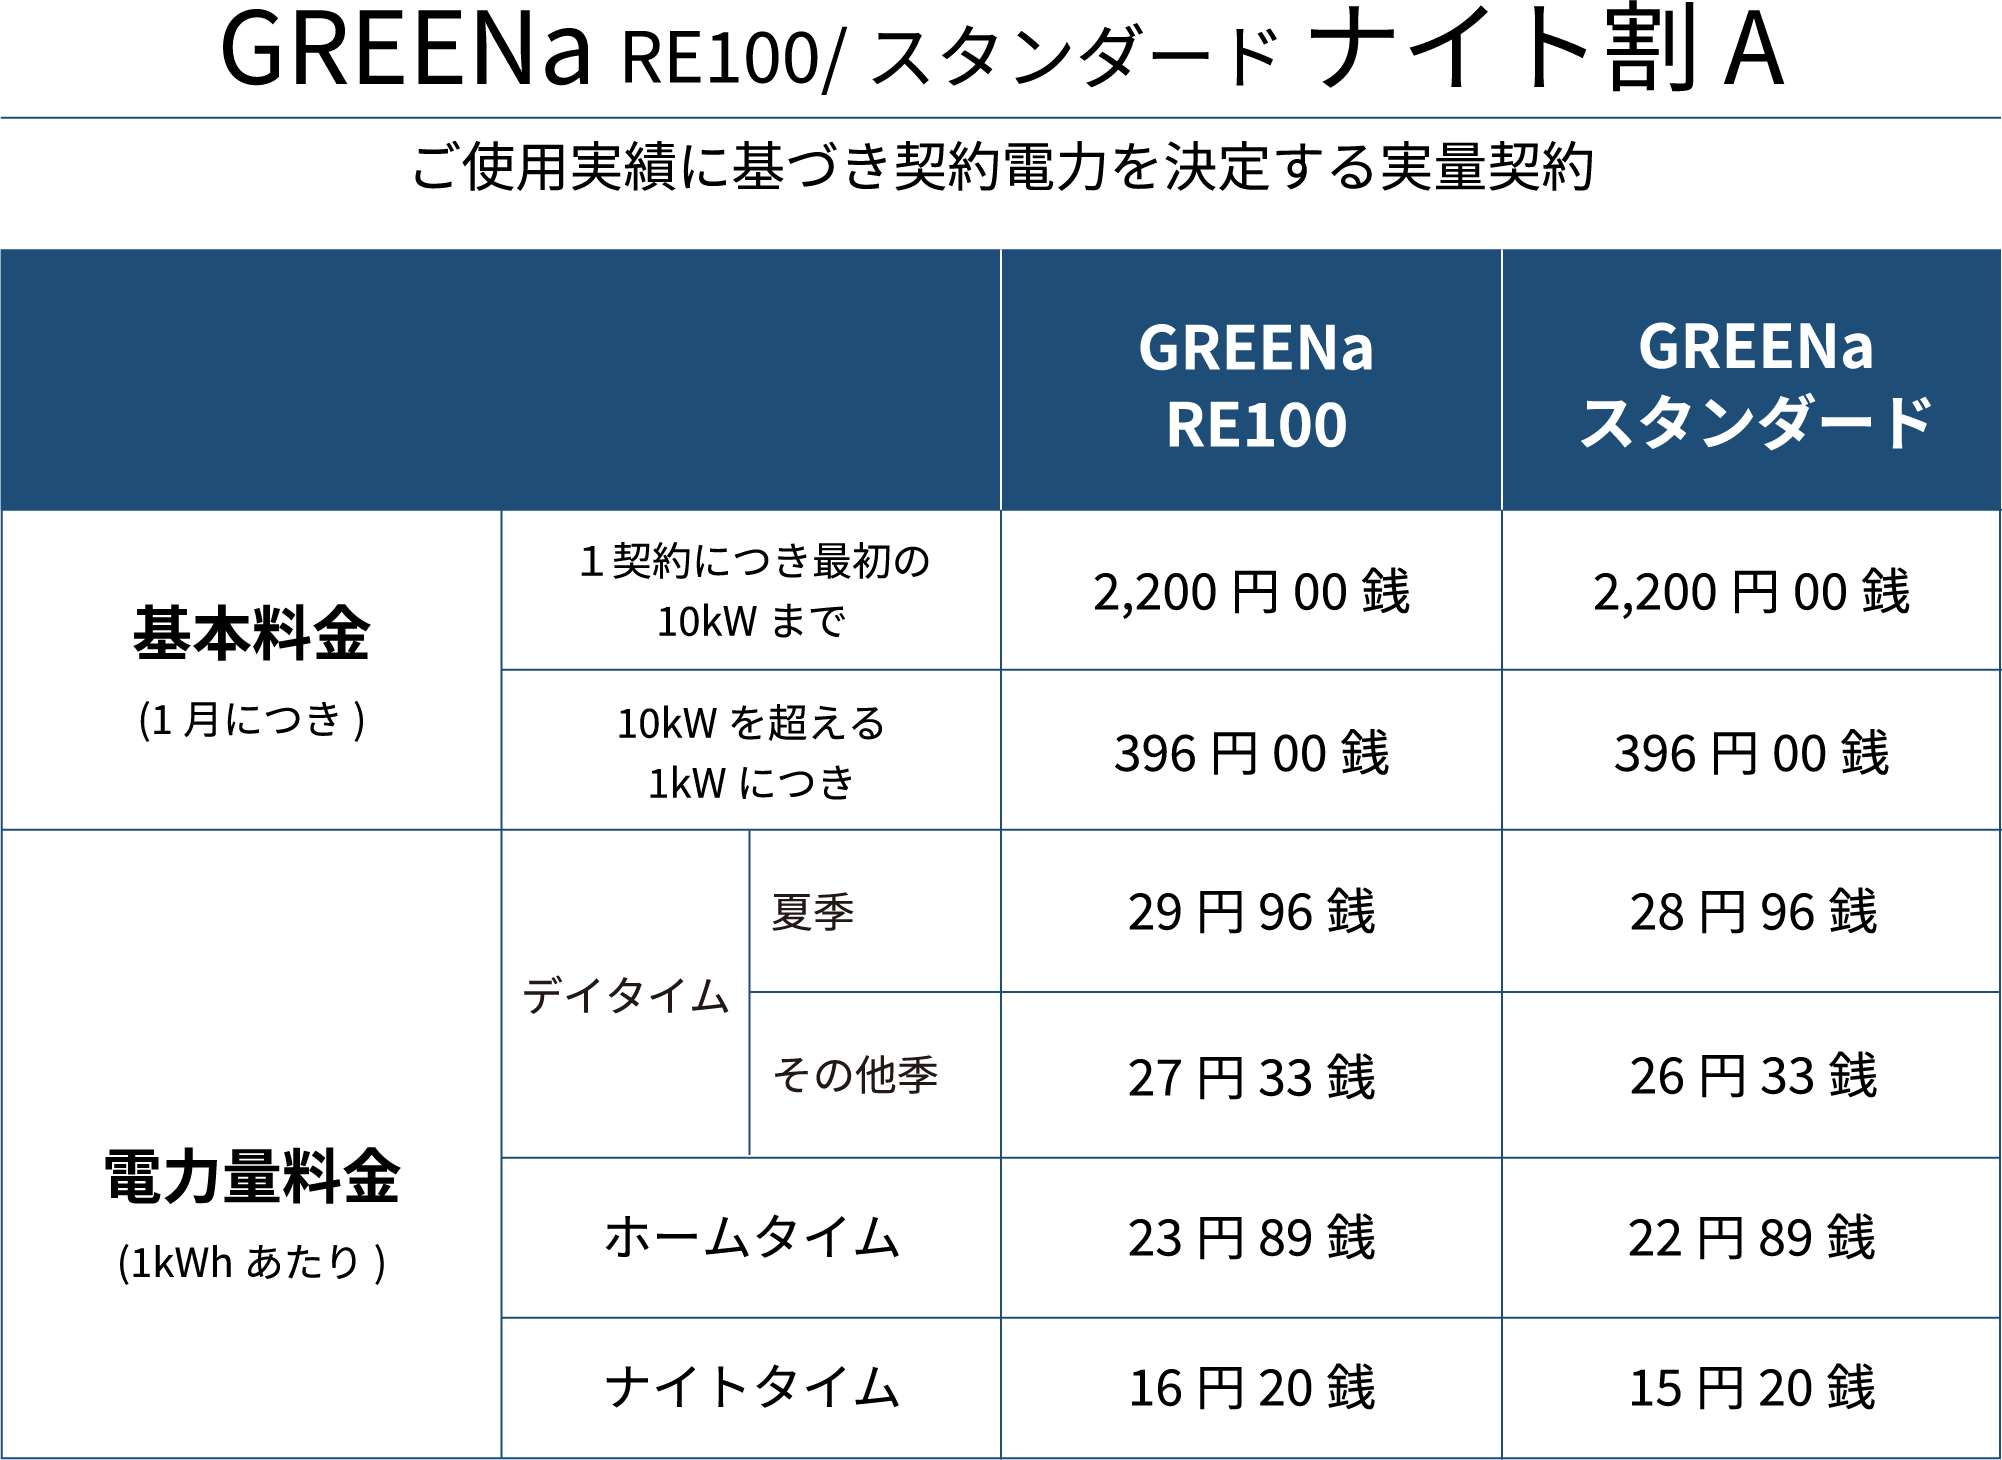 GREENa RE100/スタンダード ナイト割 S